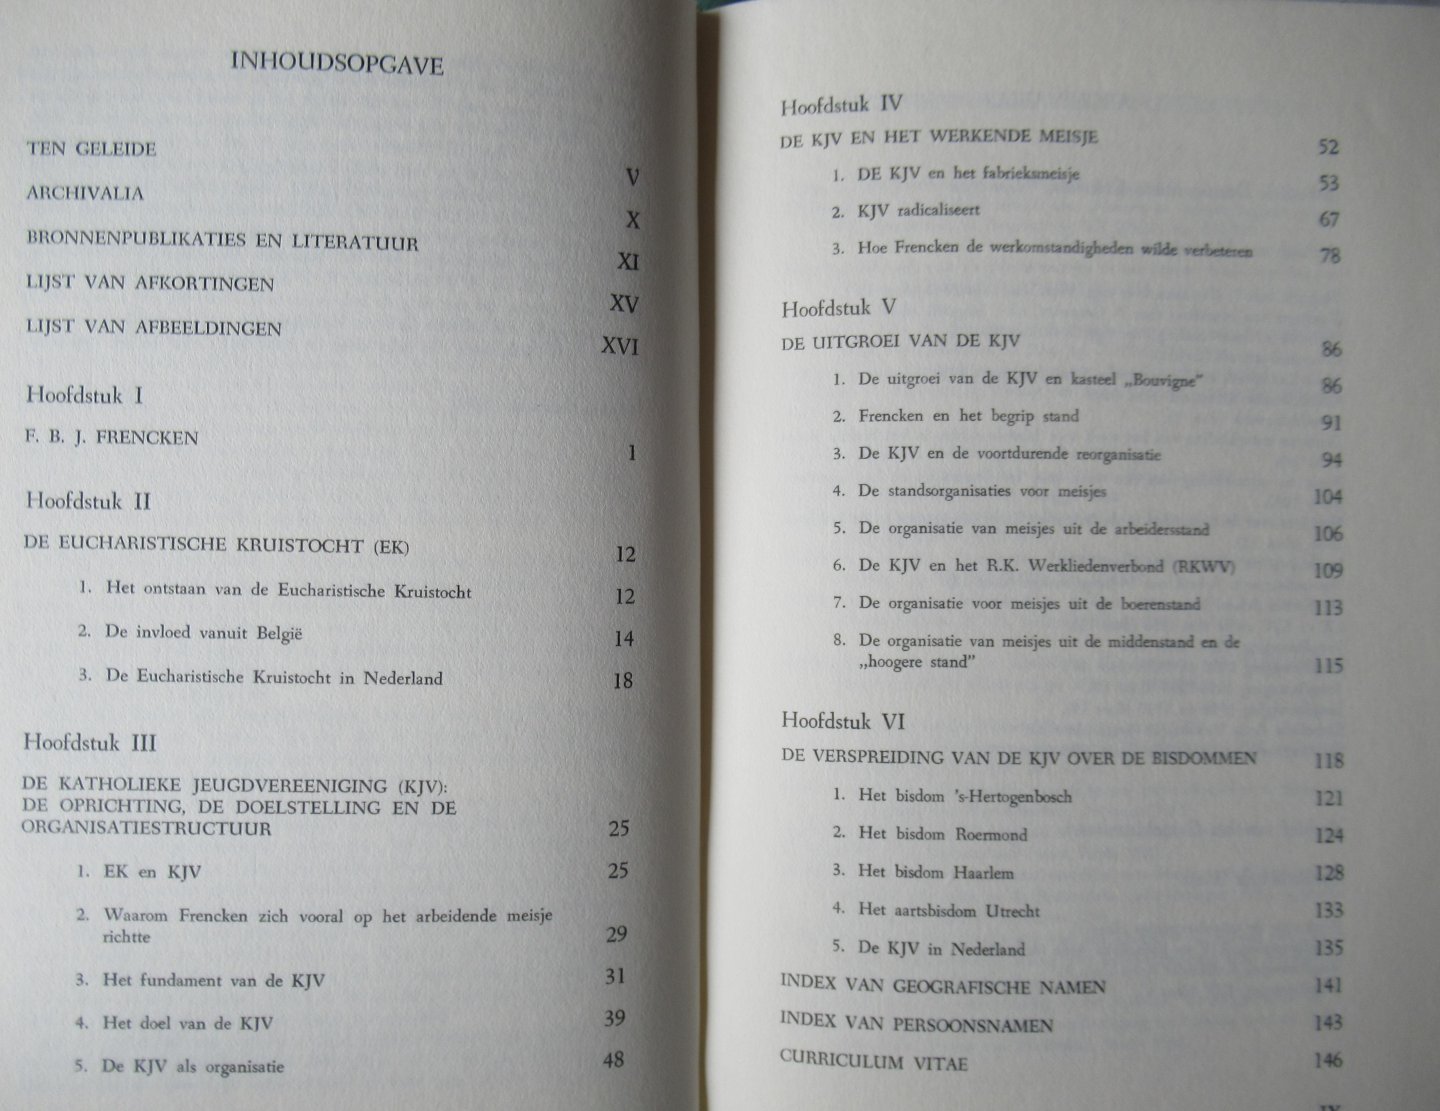 Glorius, F.J.J. Drs. - F.B.J. Frencken en de katholieke jeugdvereeniging 1927 - 1940